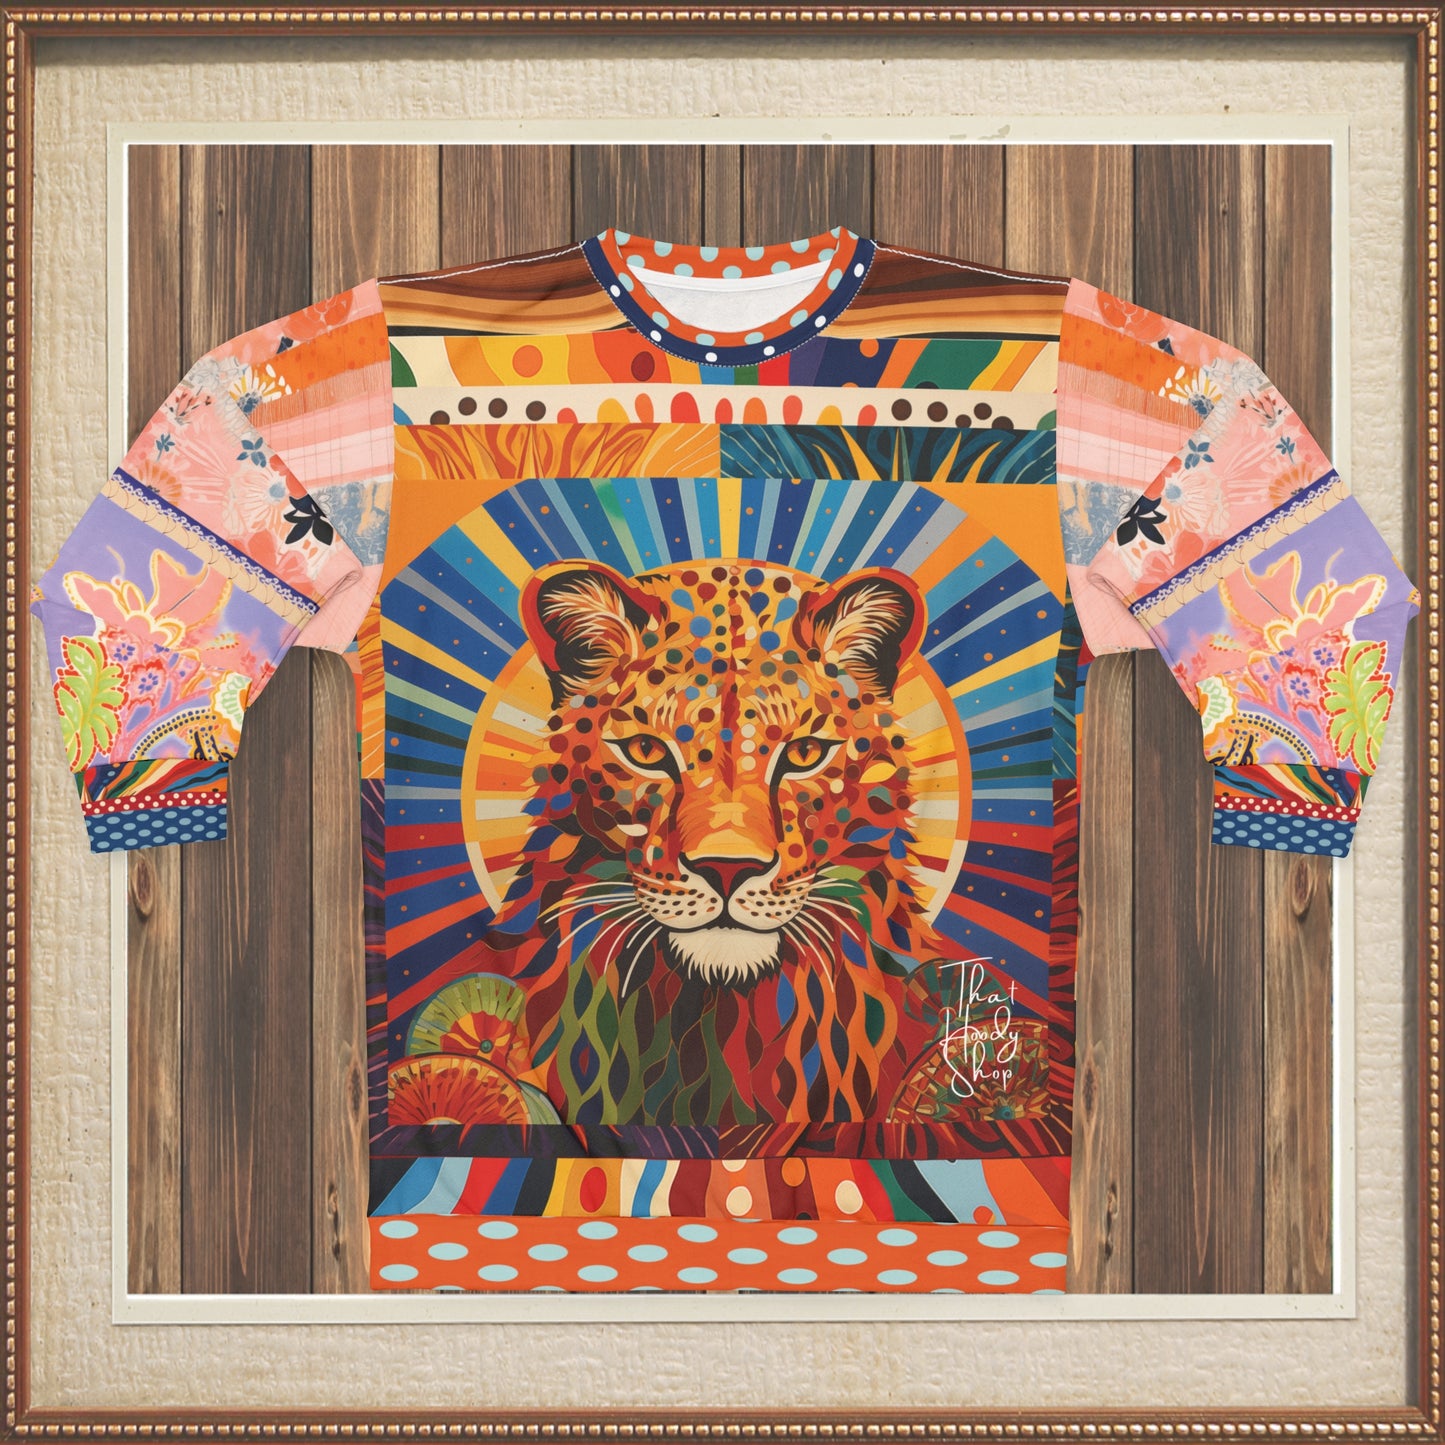 Exotic Sauvage in Rainbow Leopard Unisex Sweatshirt